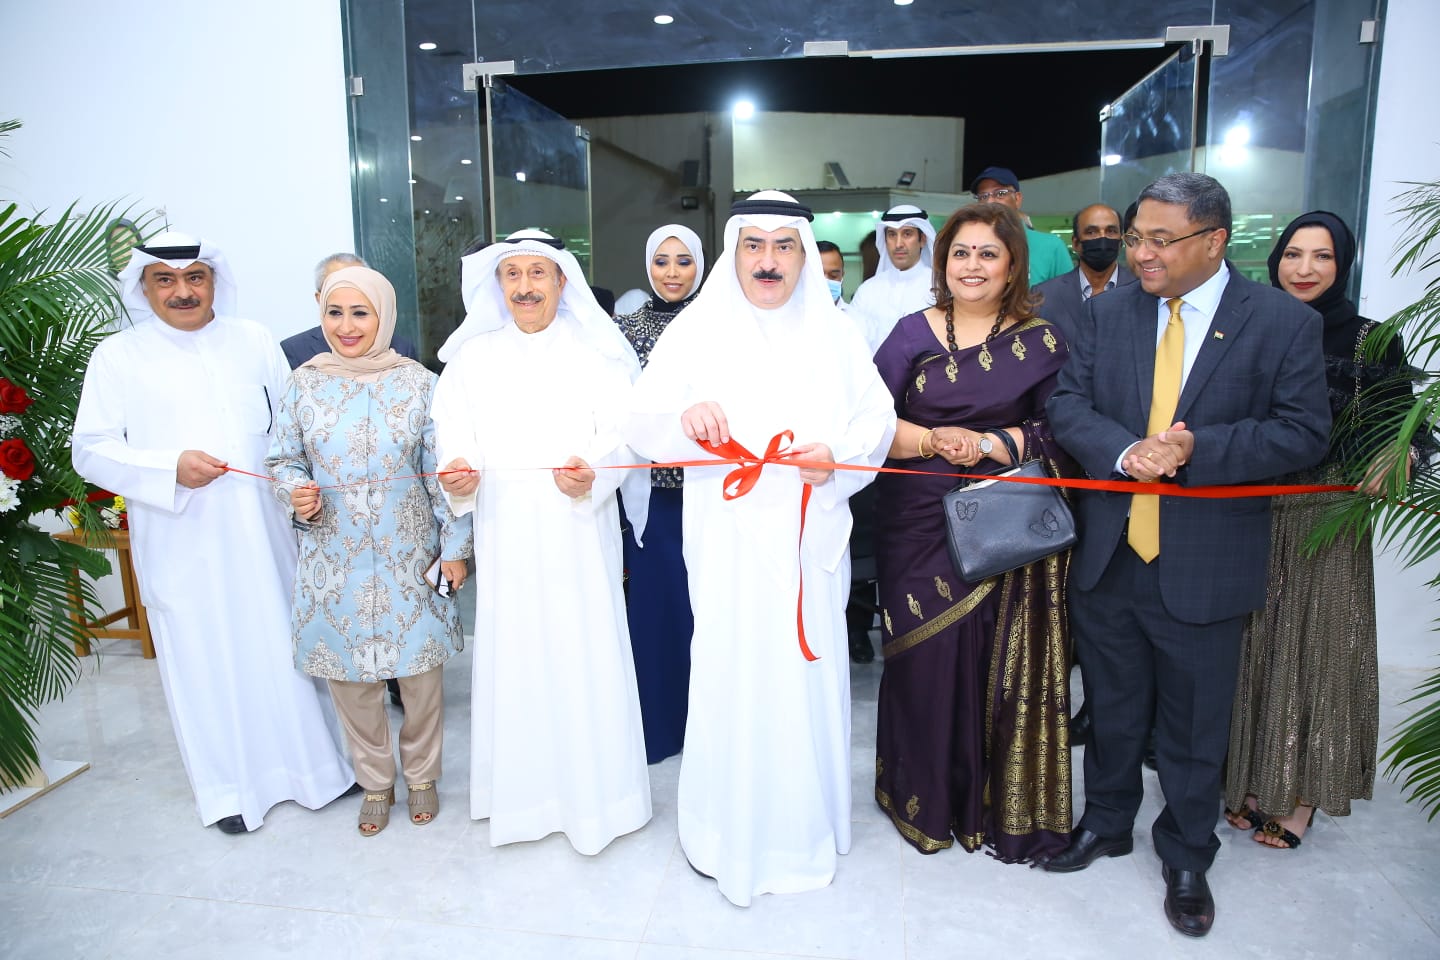 Kamel Abdul Jalil inaugurates the art exhibition in the presence of Sibi George, Abdul Rasoul Salman and Joice Sibi. – Photos by Yasser Al-Zayyatn